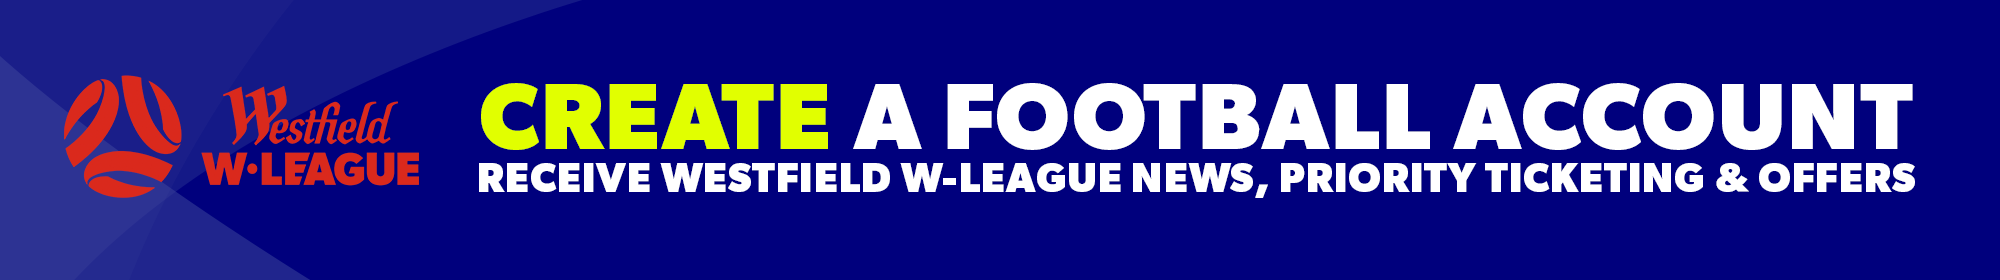 W-League Football Account Create